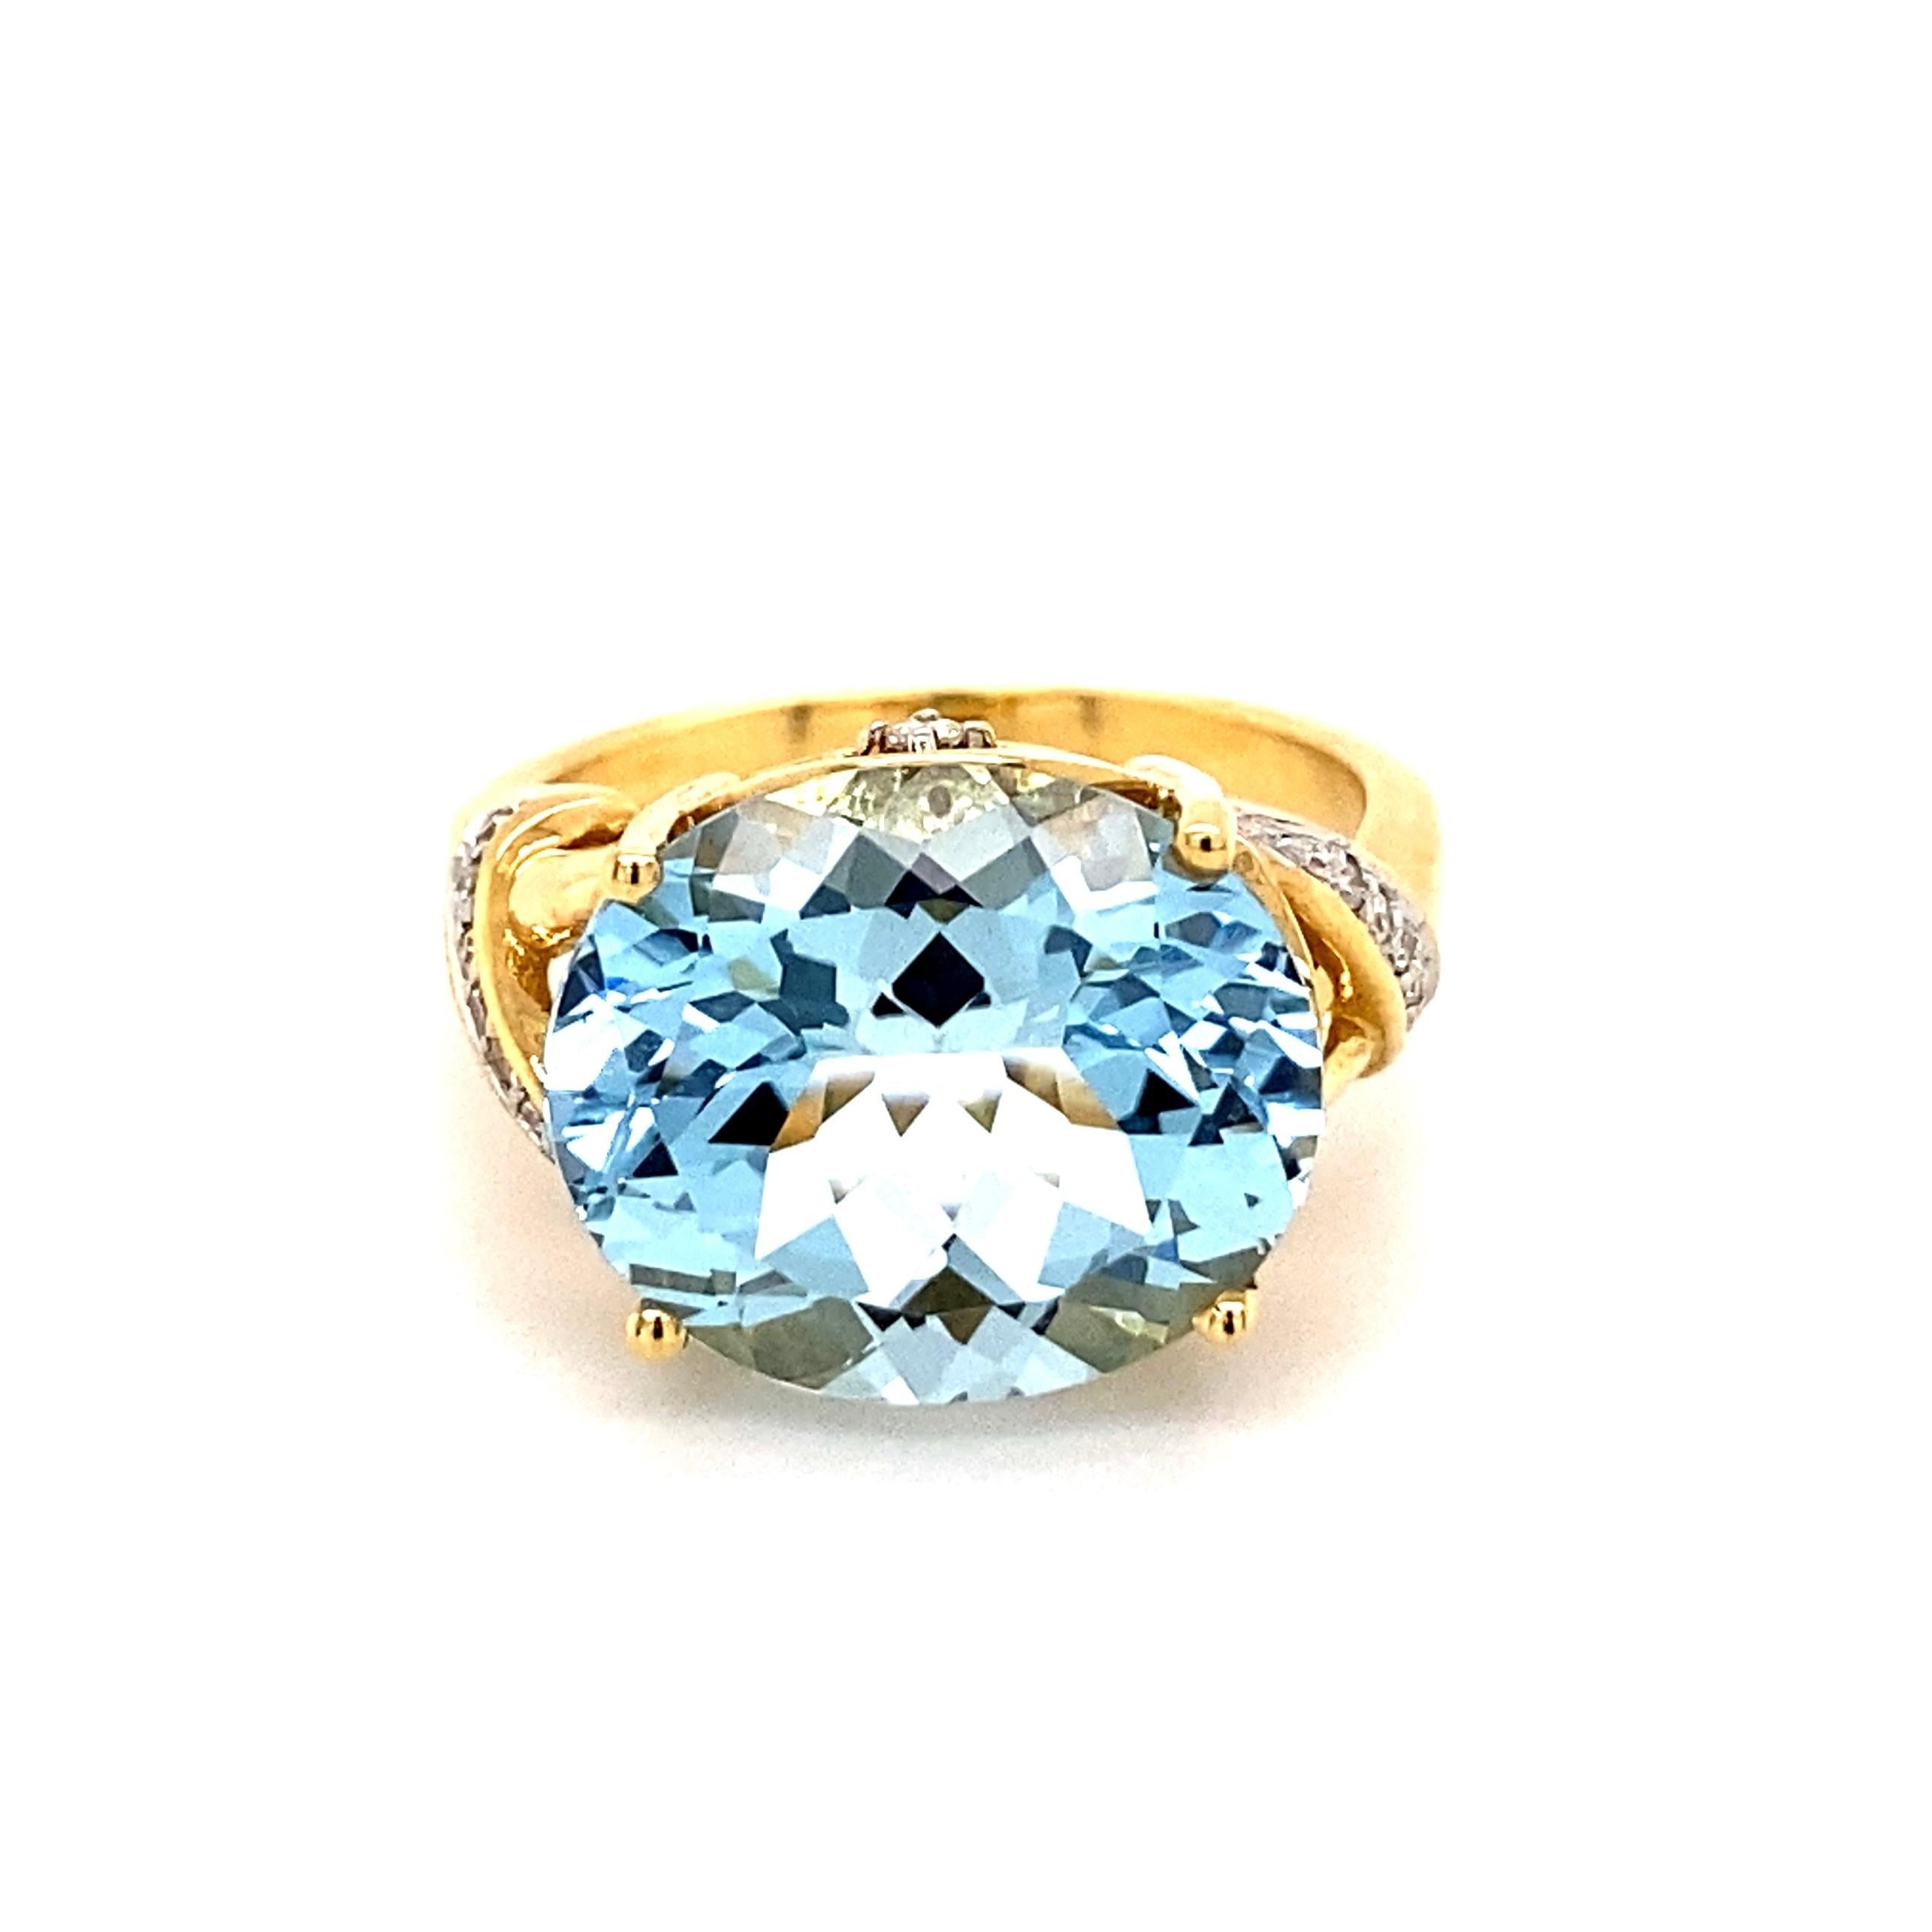 Mixed Cut 7.61 Carat Aquamarine and Diamond Art Deco Revival Gold Ring For Sale